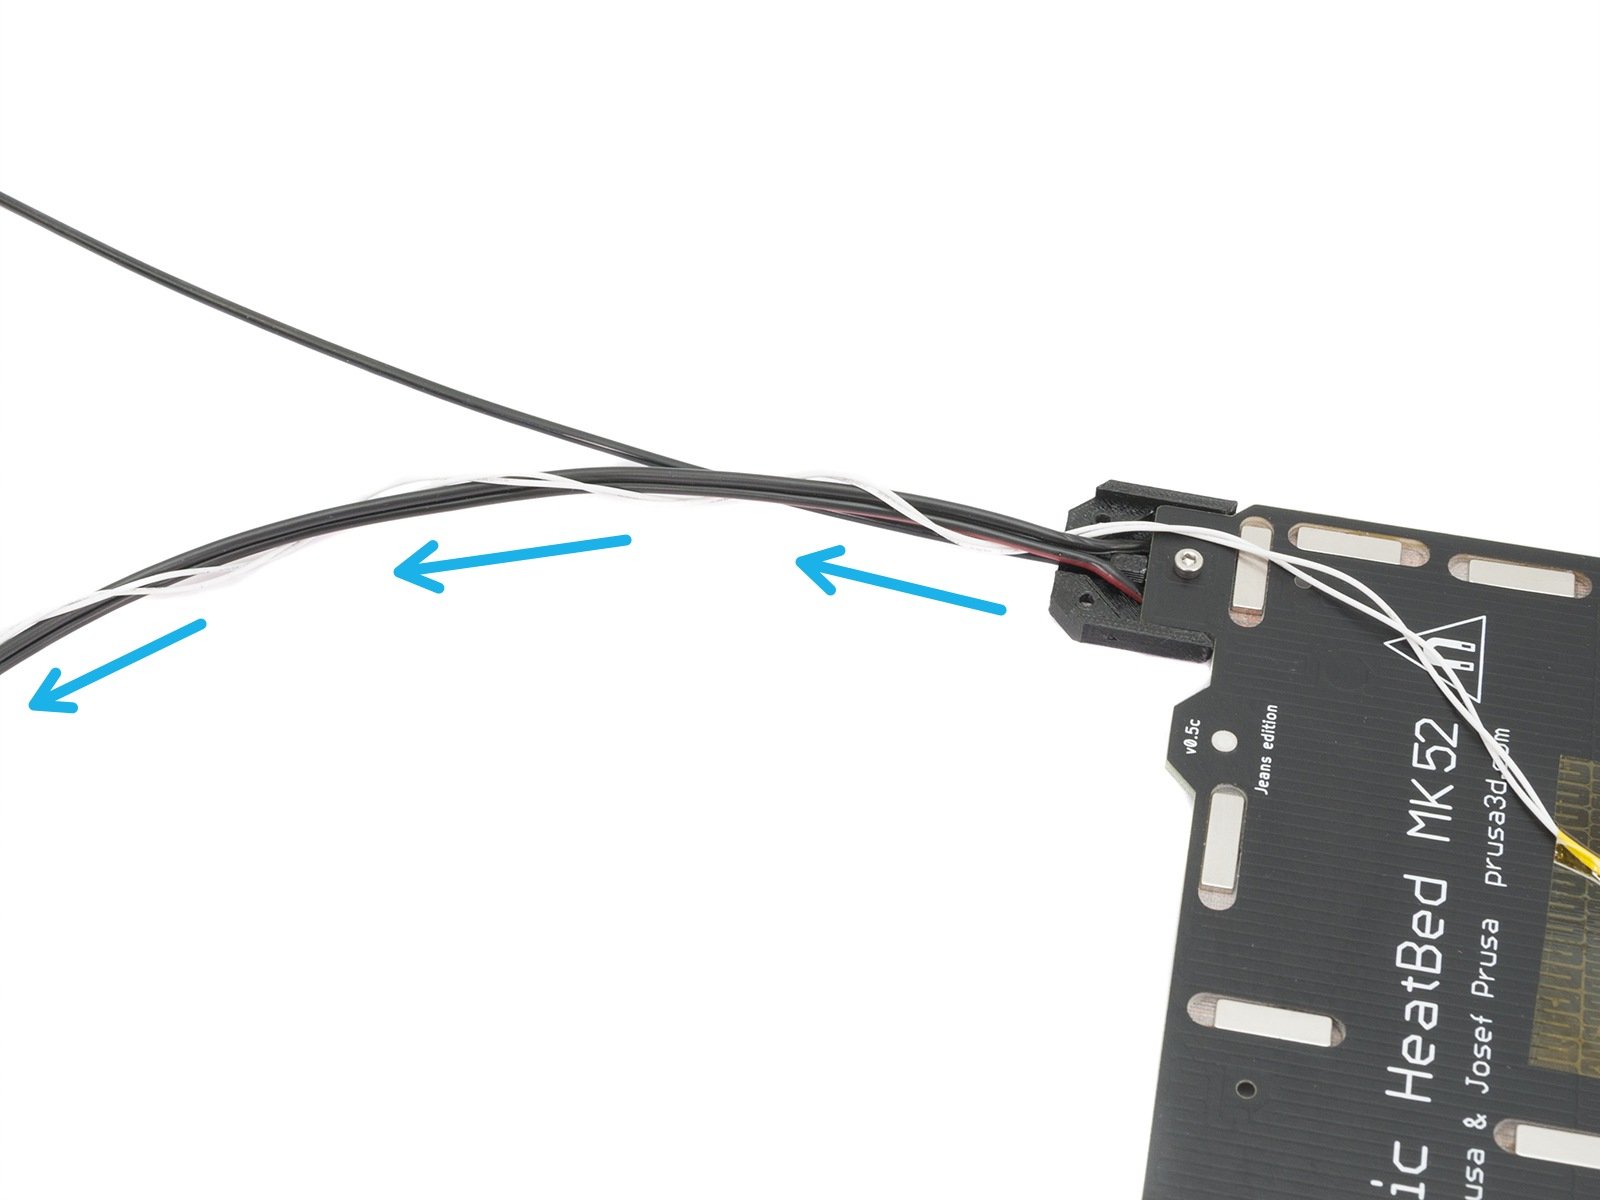 Proper cable management (new design)